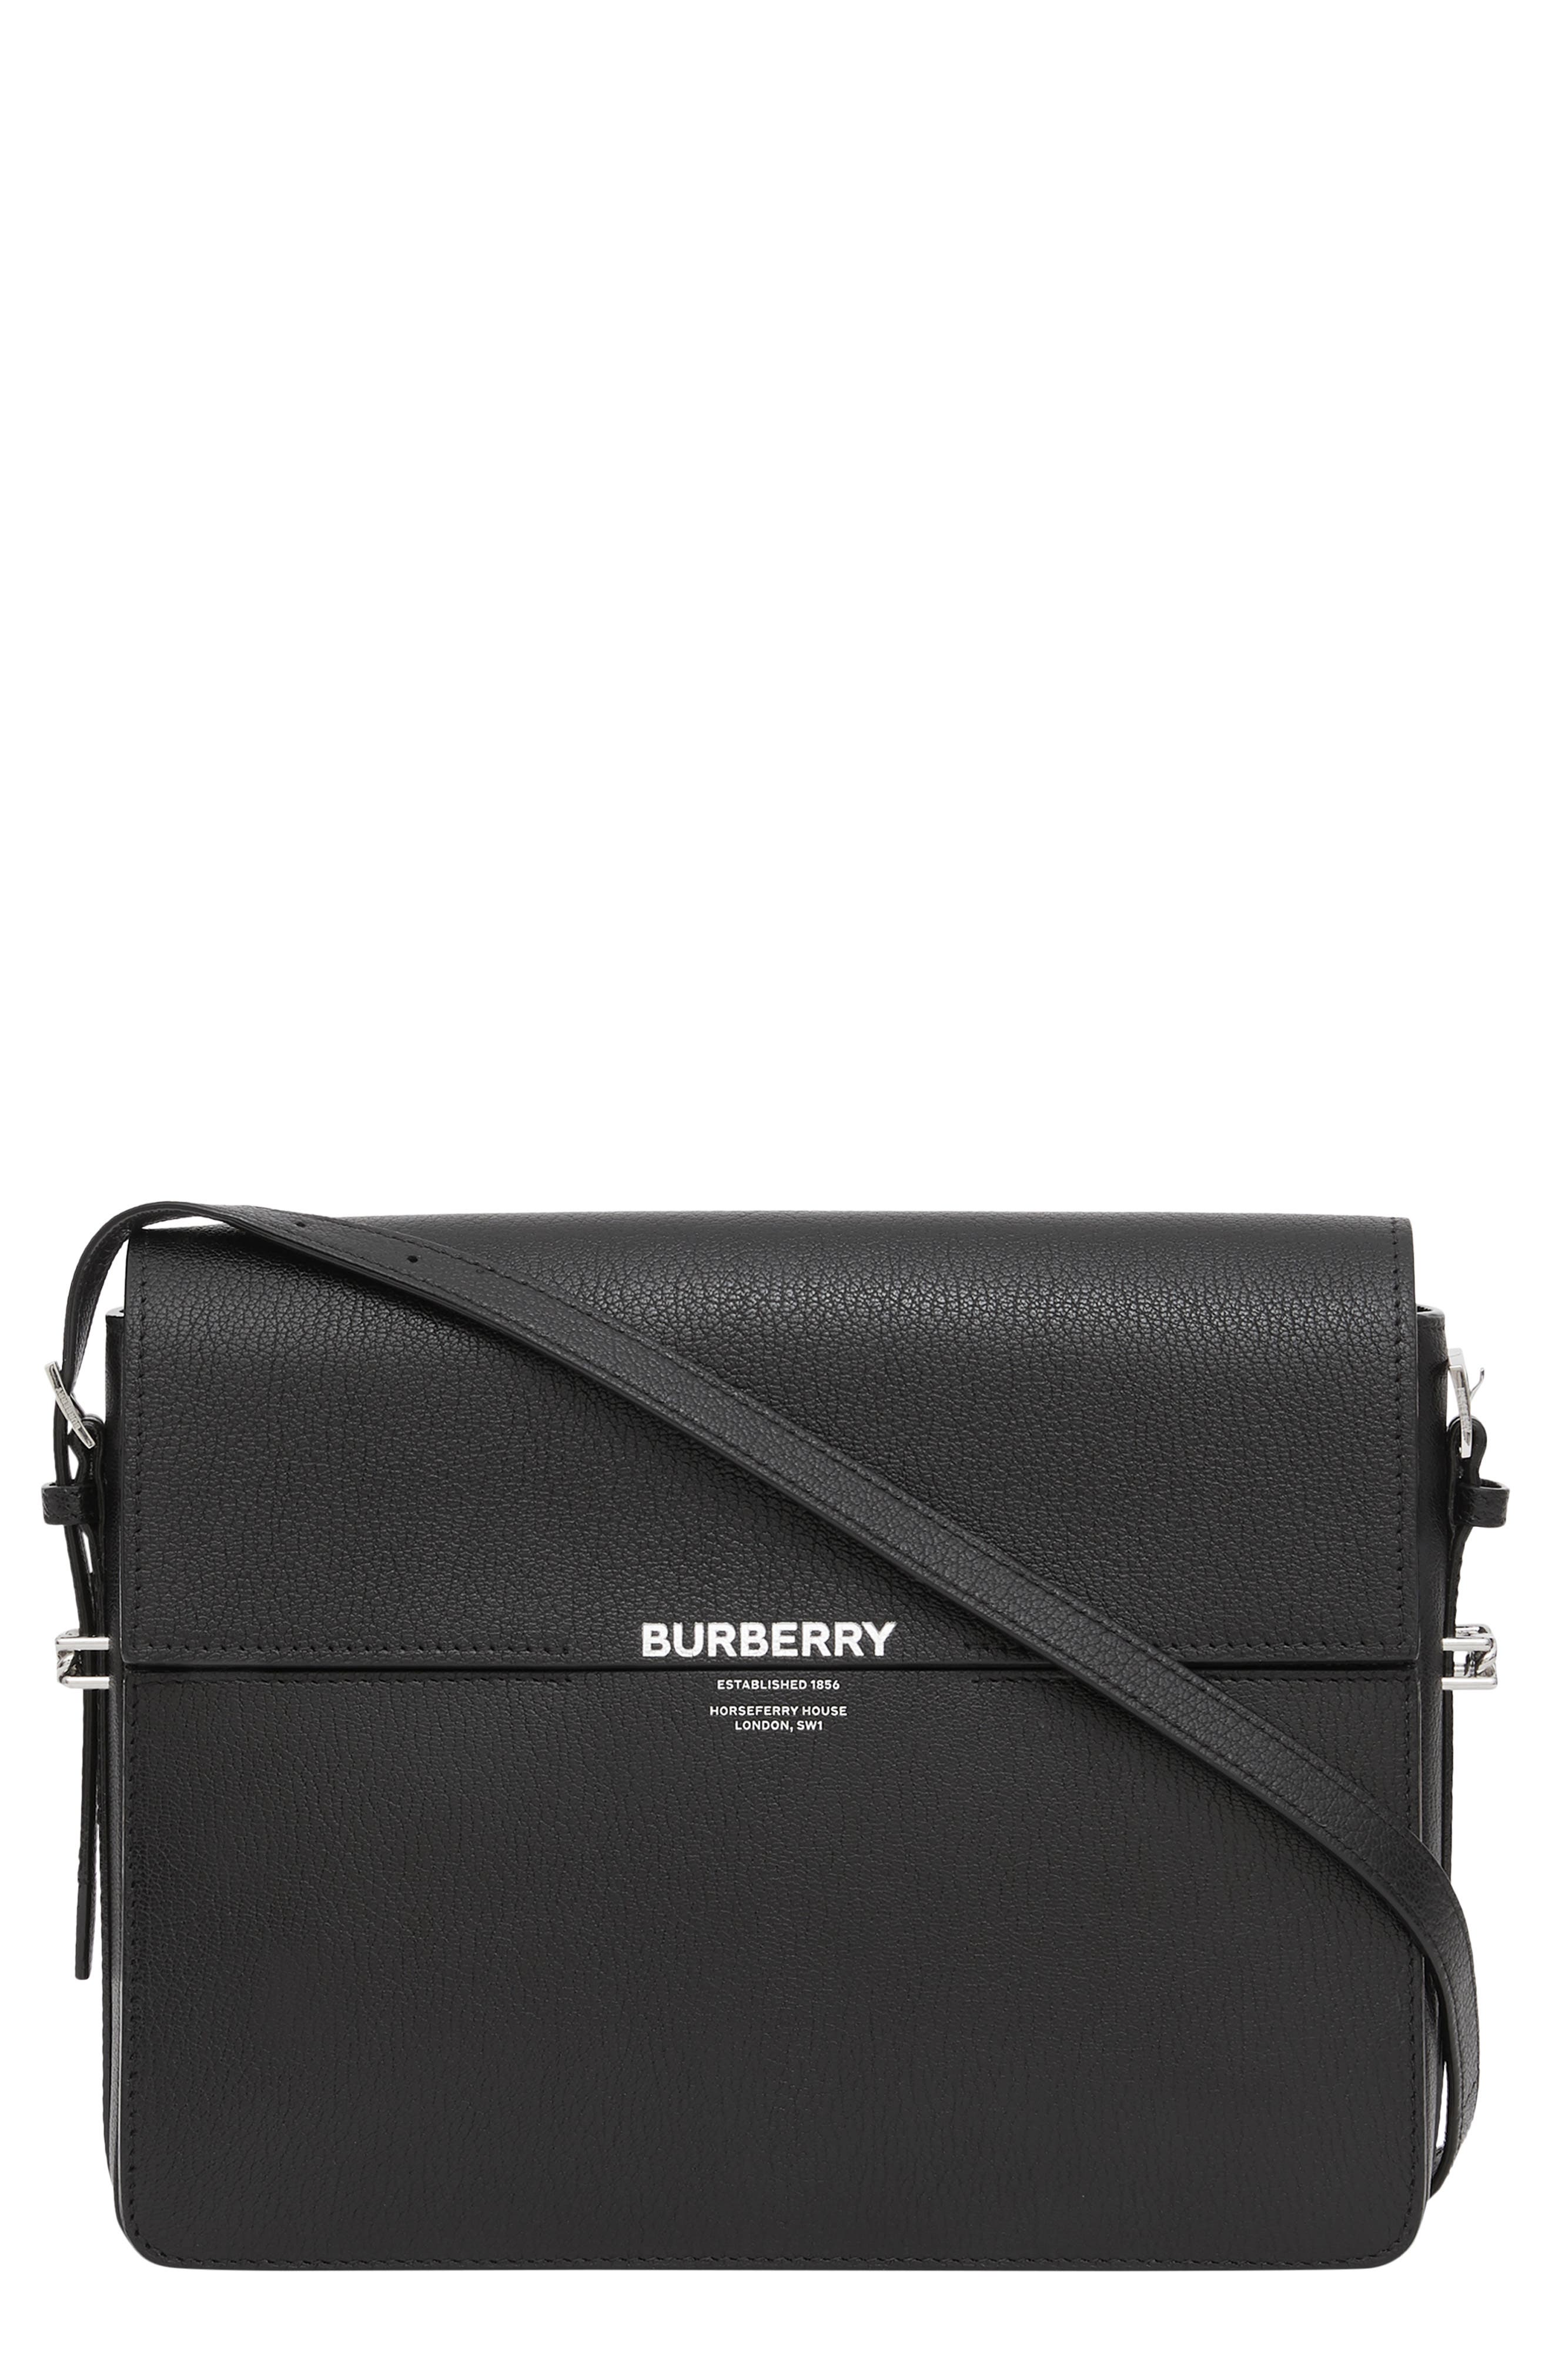 burberry grace bag